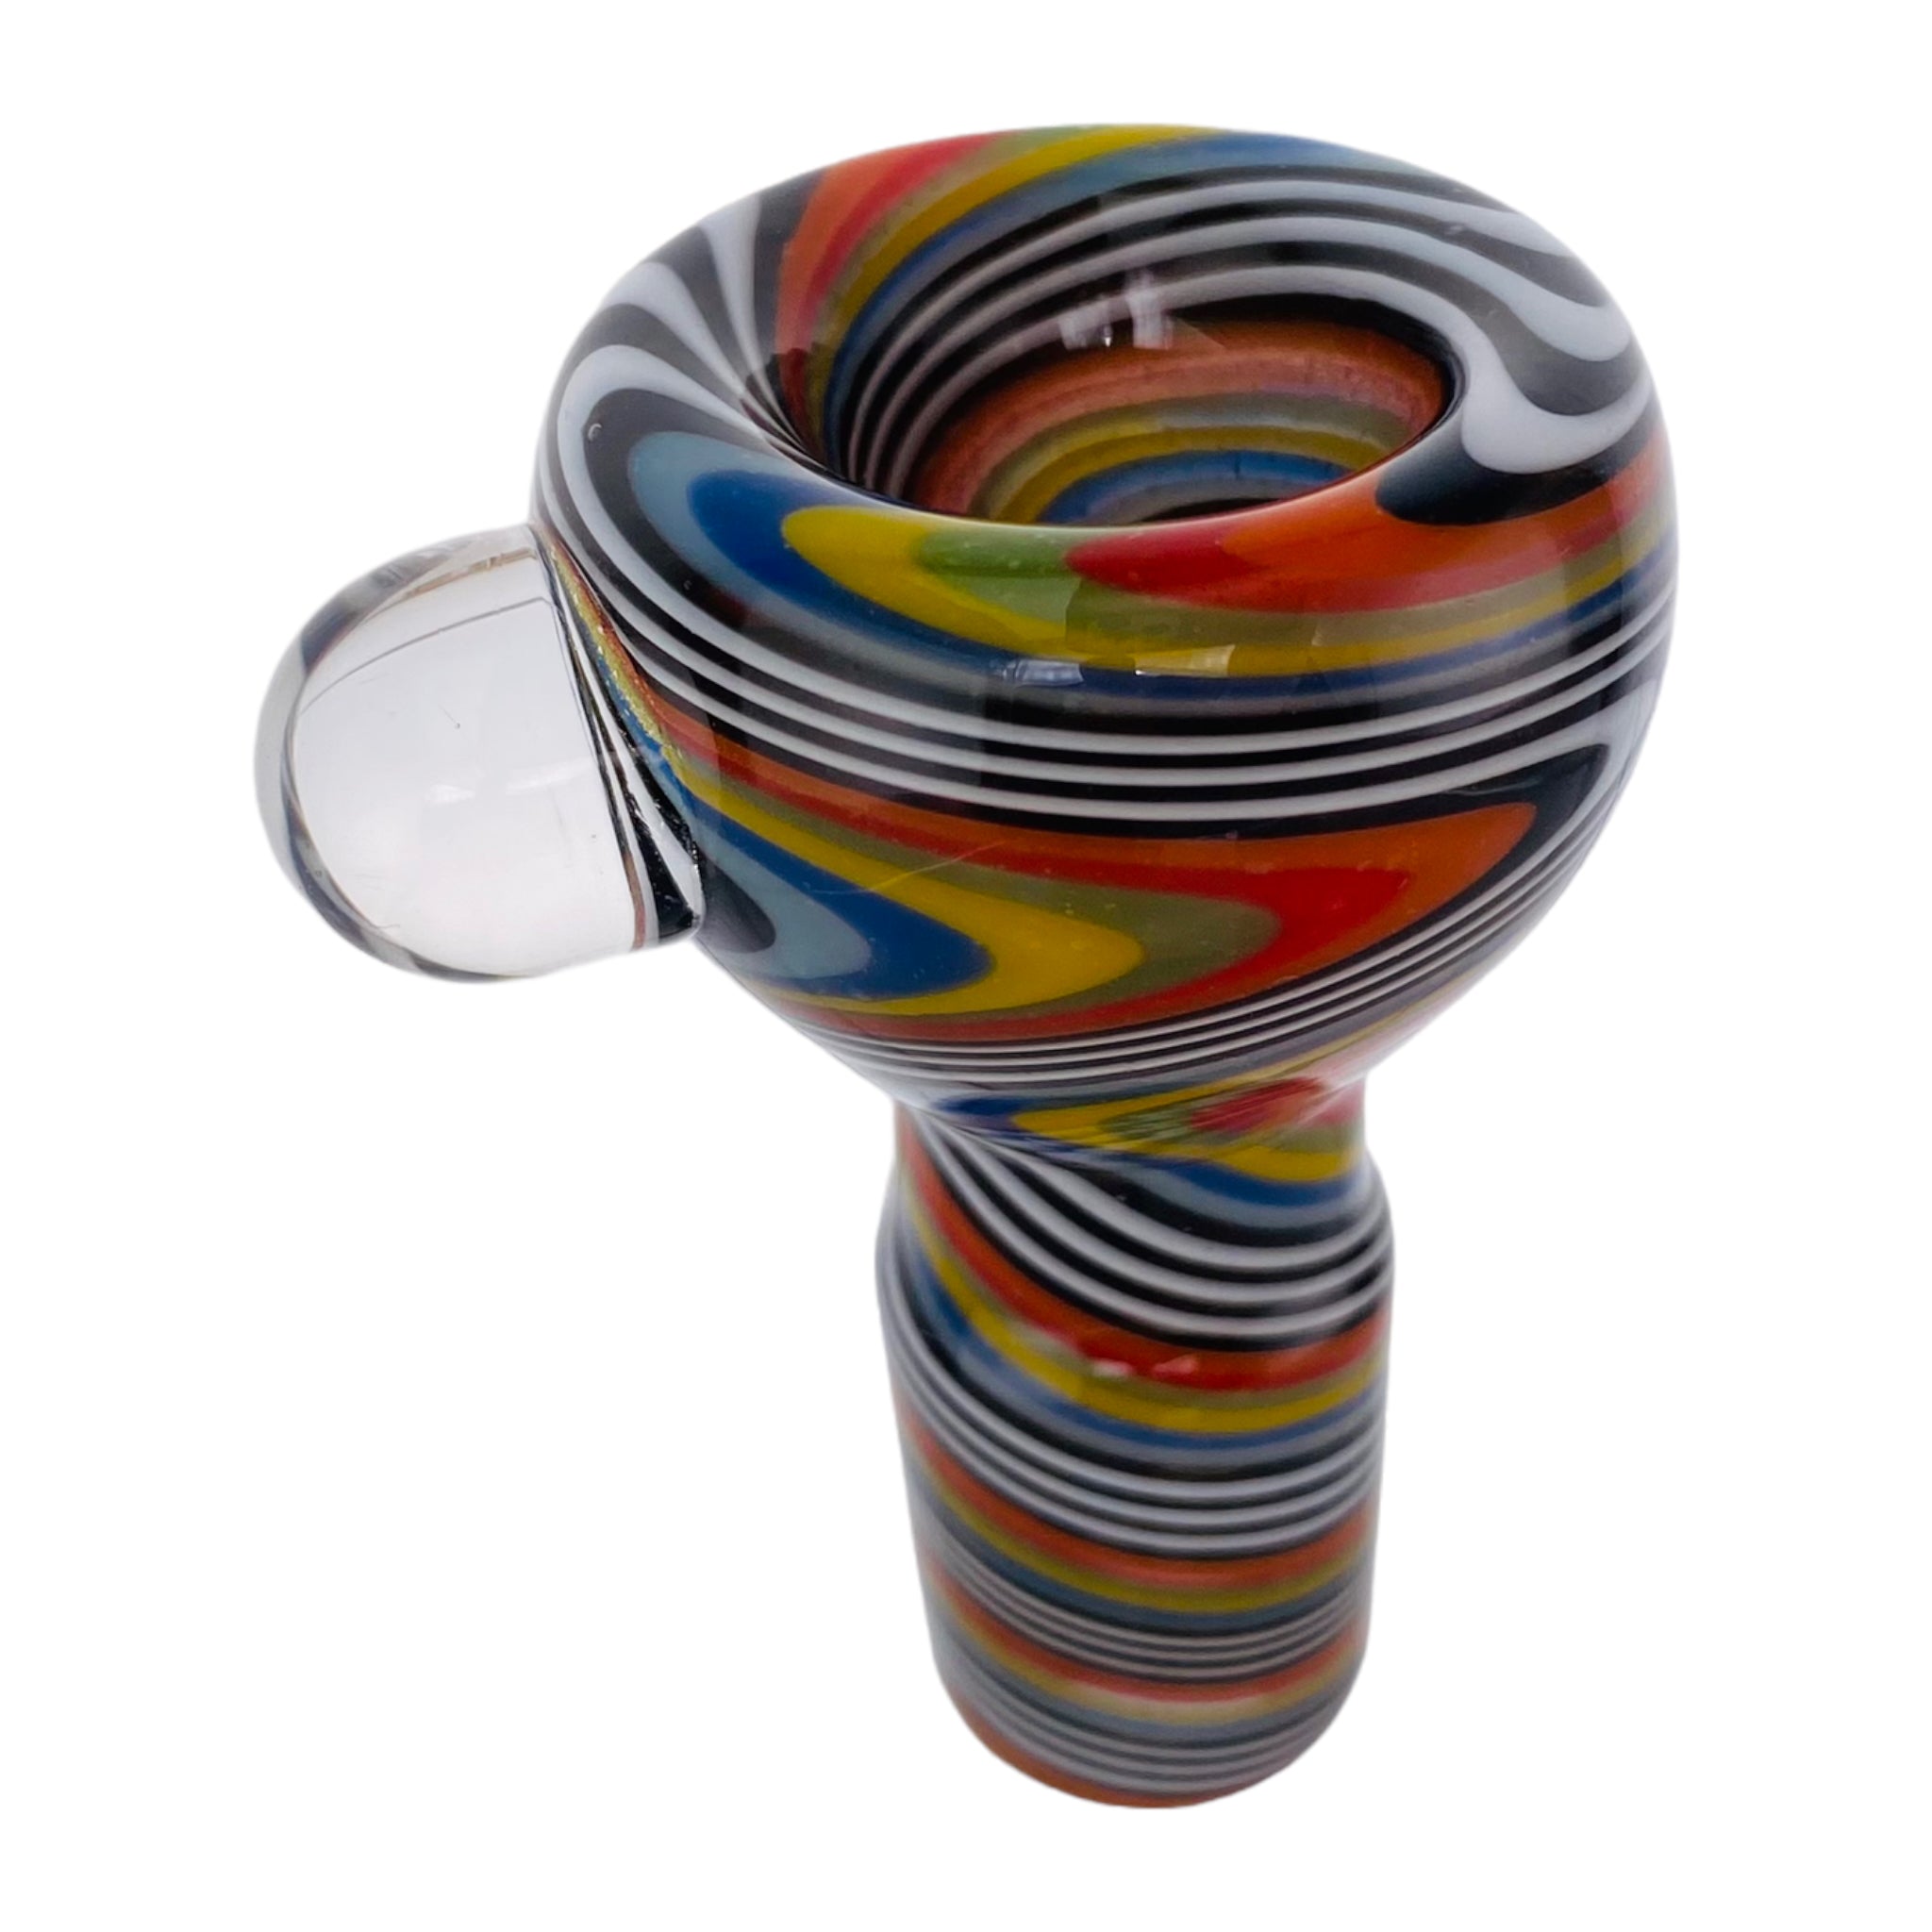 18mm Flower Bowl - Hypnotic Full Color Twist Bong Bowl Piece